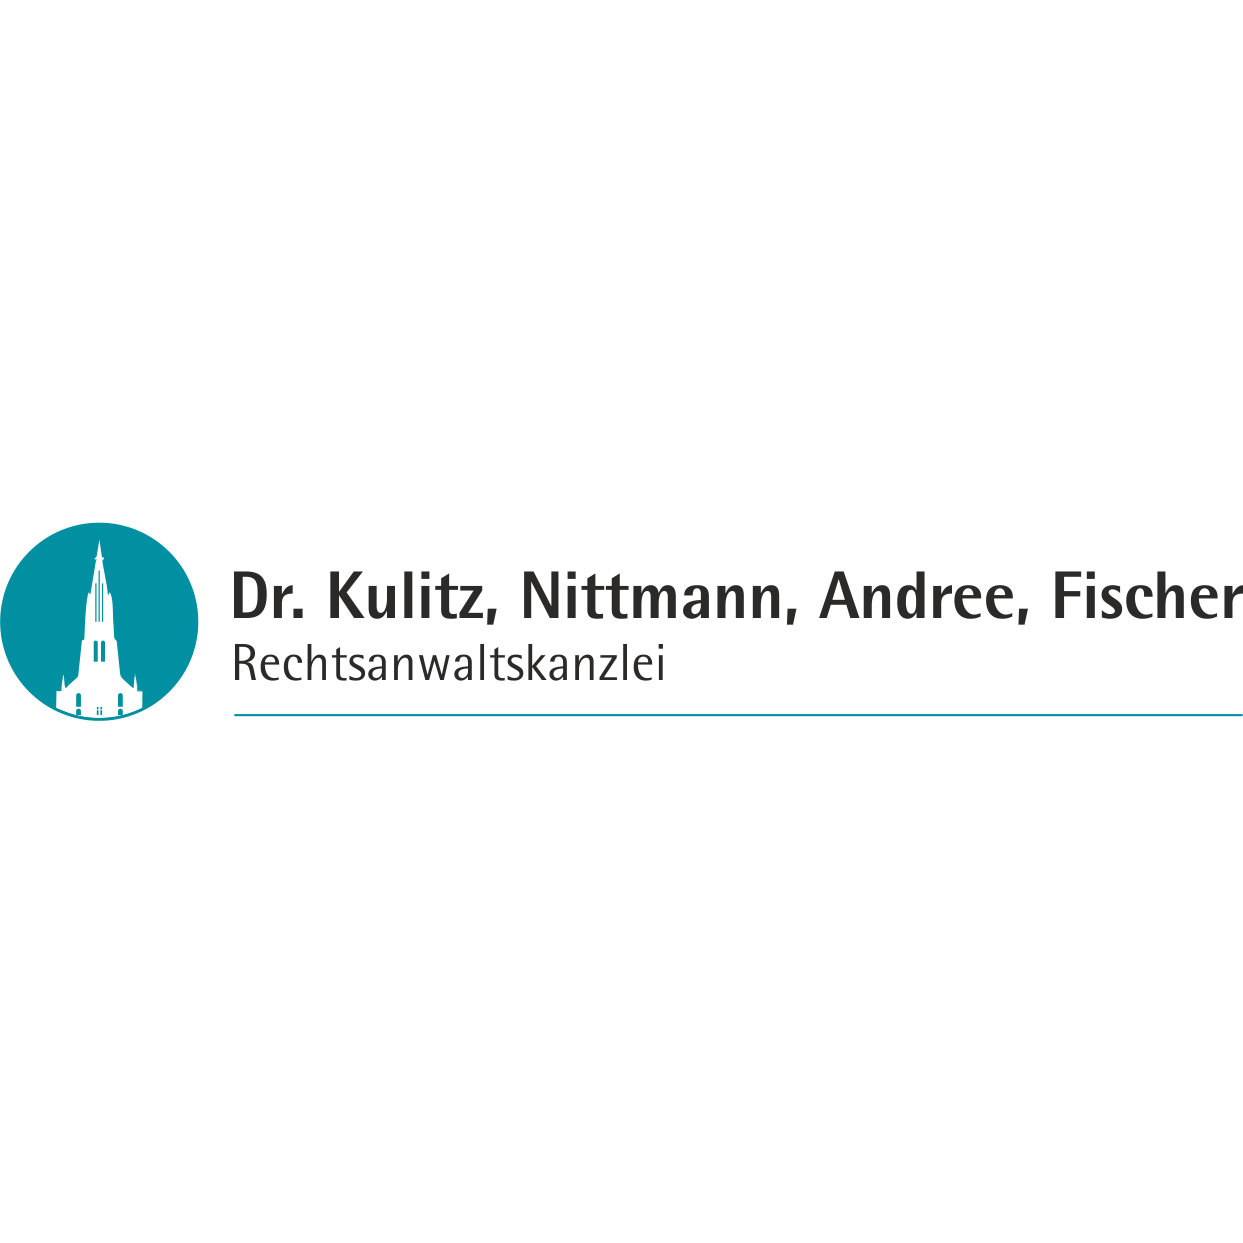 Rechtsanwalt für Scheidung - Familienrecht Andreas Fischer Logo